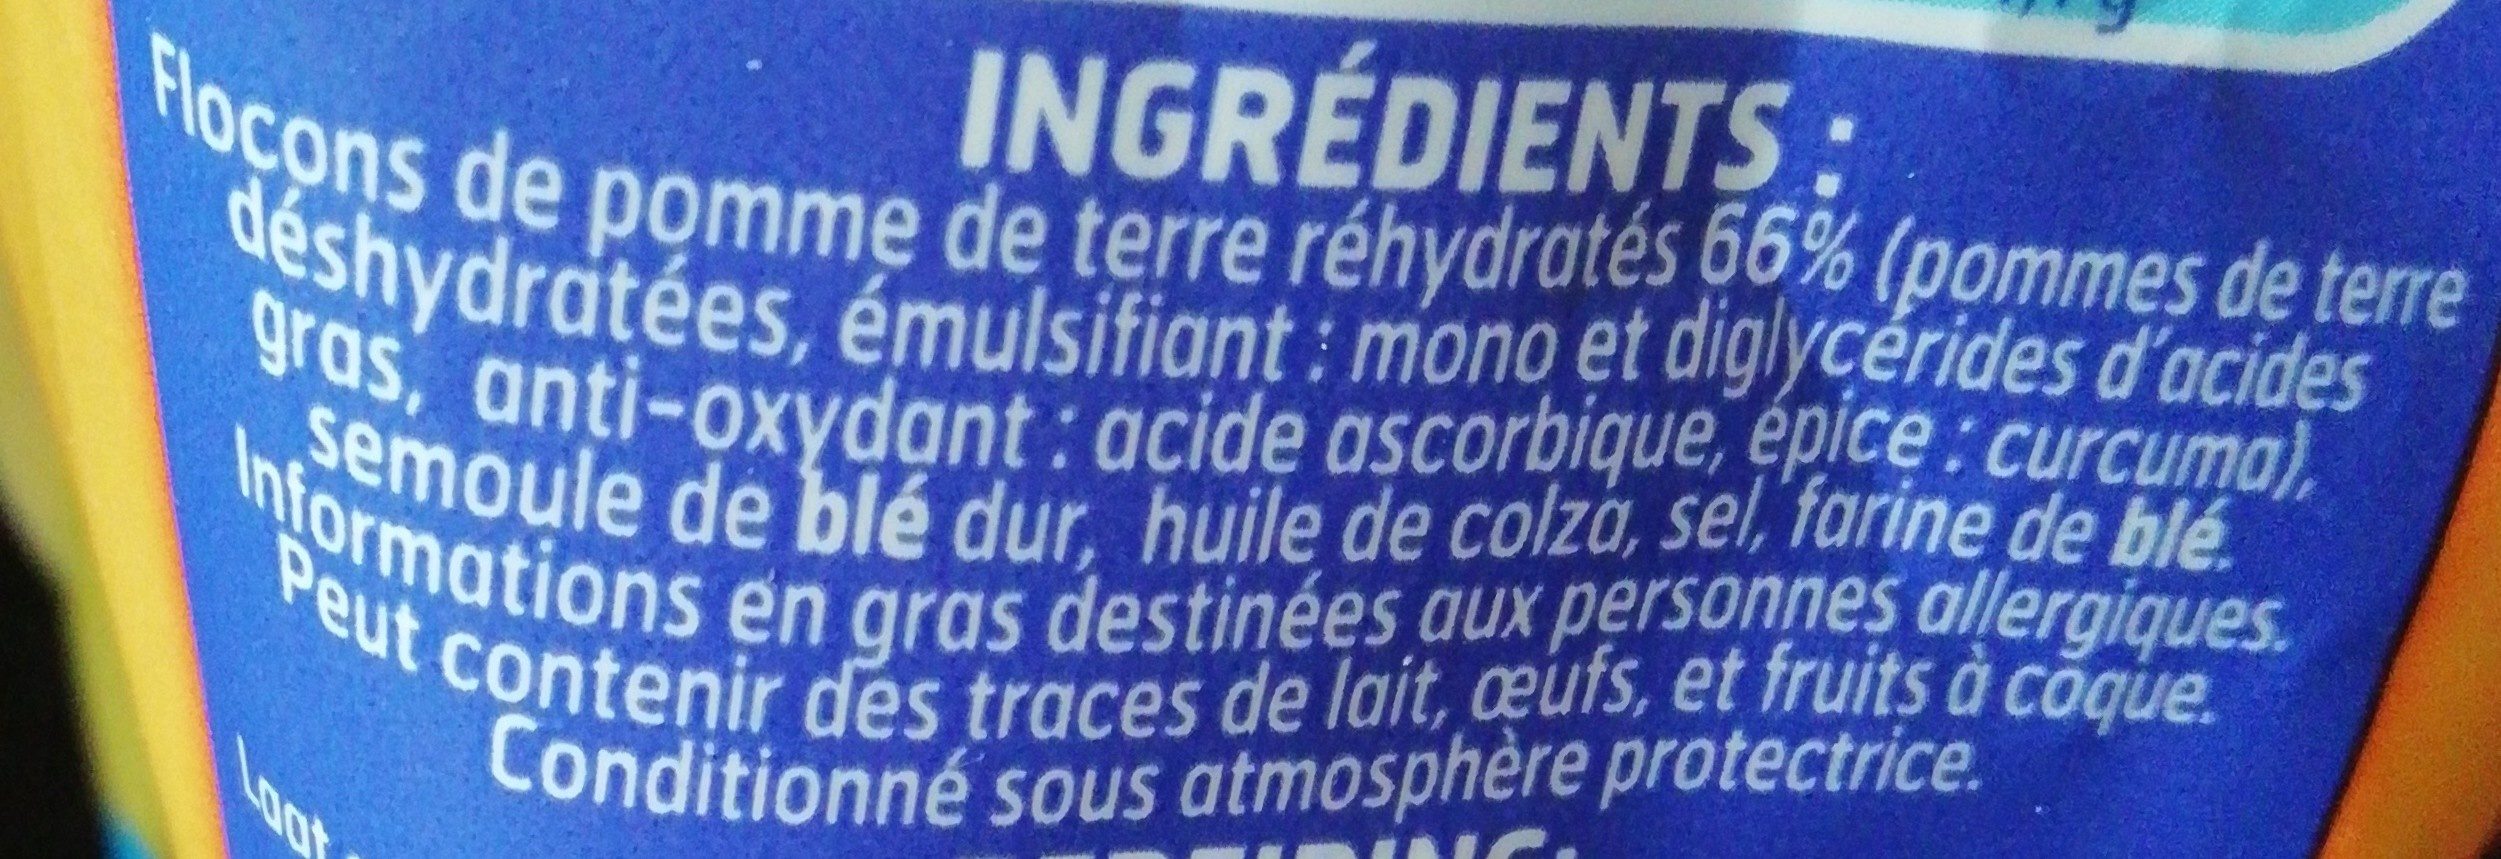 Gnocchi à Poêler - Ingredients - fr